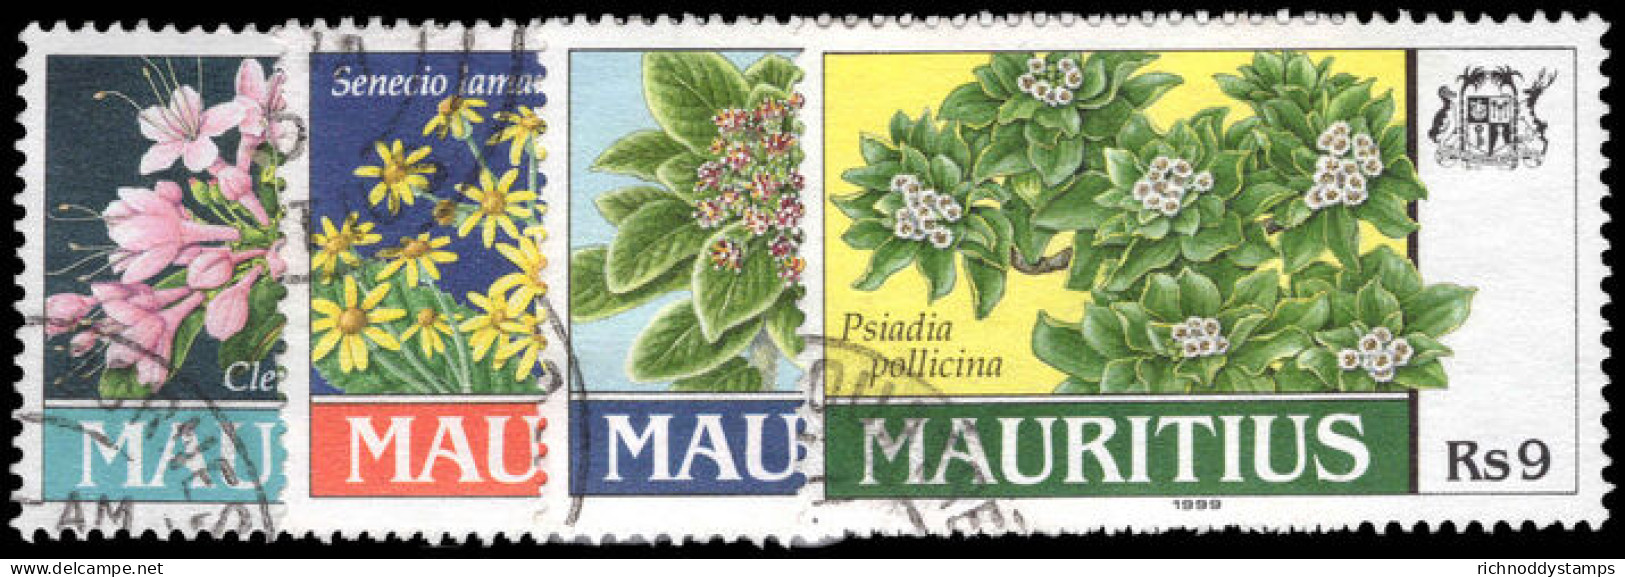 Mauritius 1999 Local Plants Fine Used. - Maurice (1968-...)